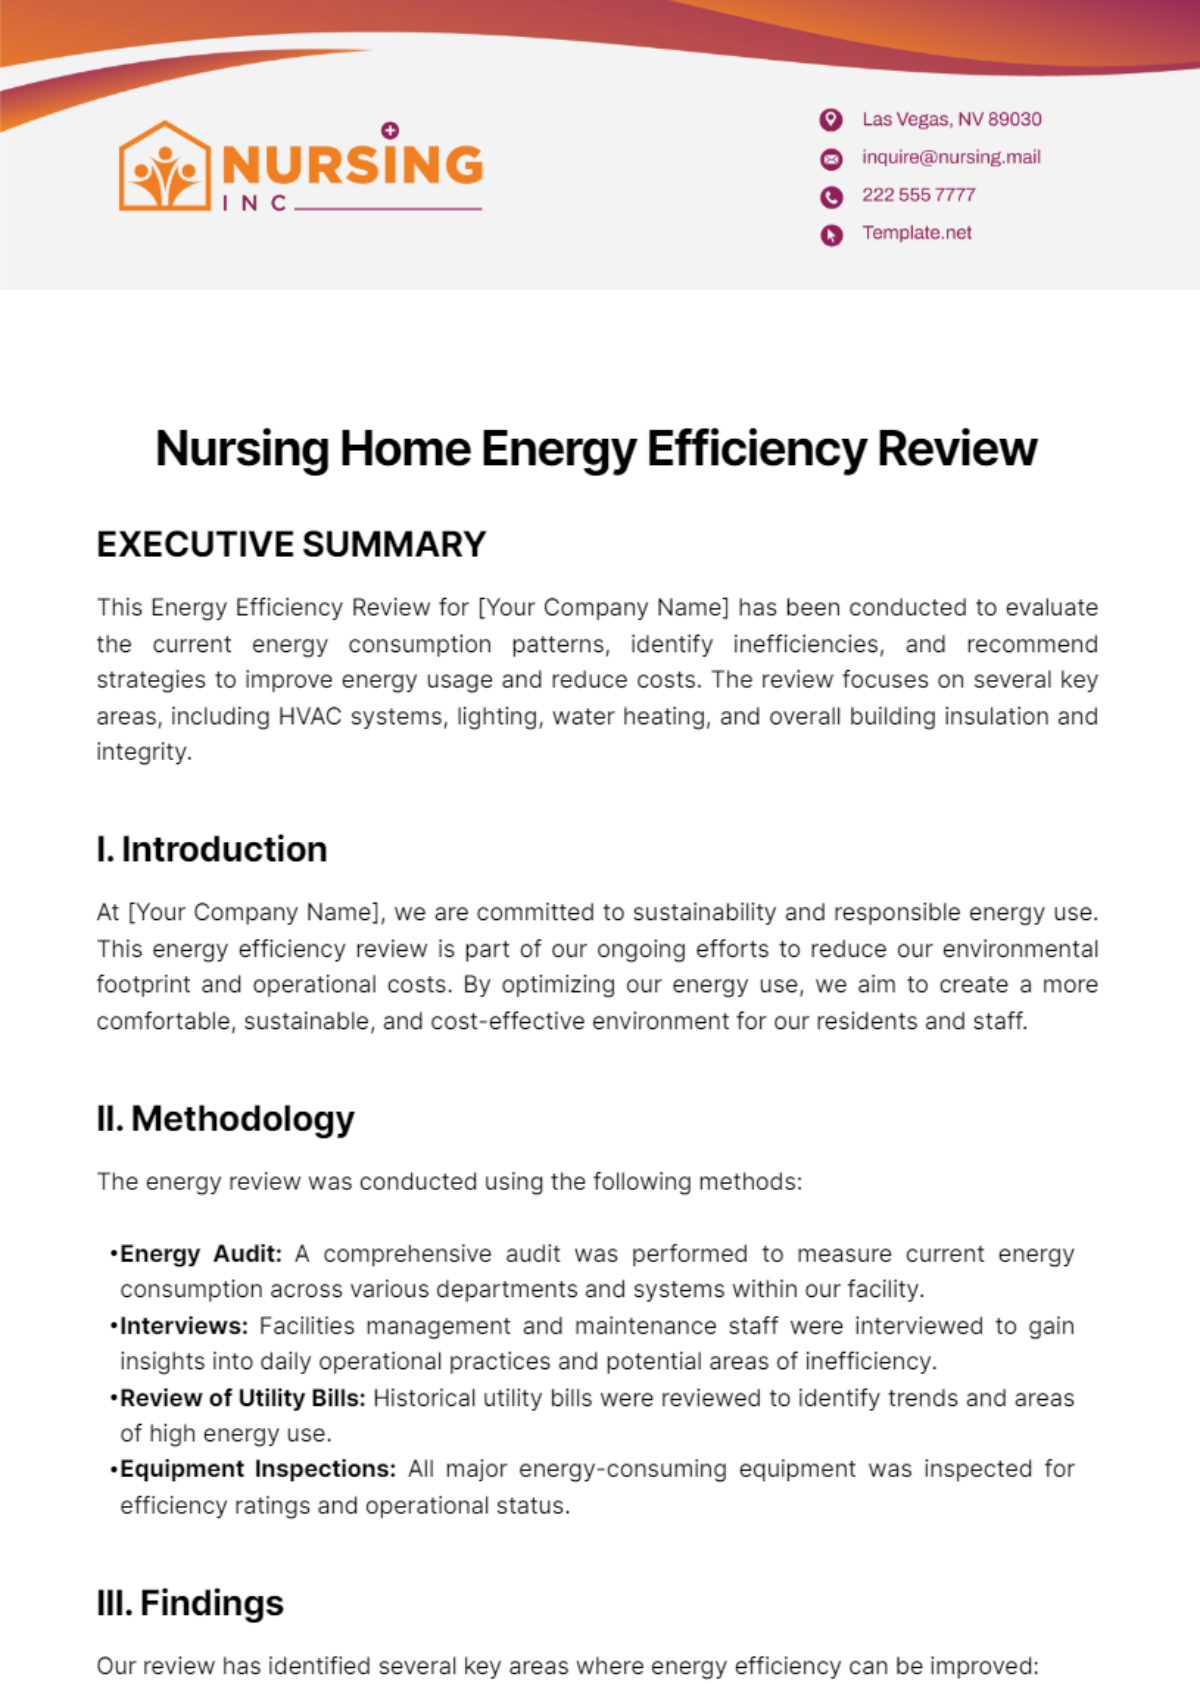 Nursing Home Energy Efficiency Review Template